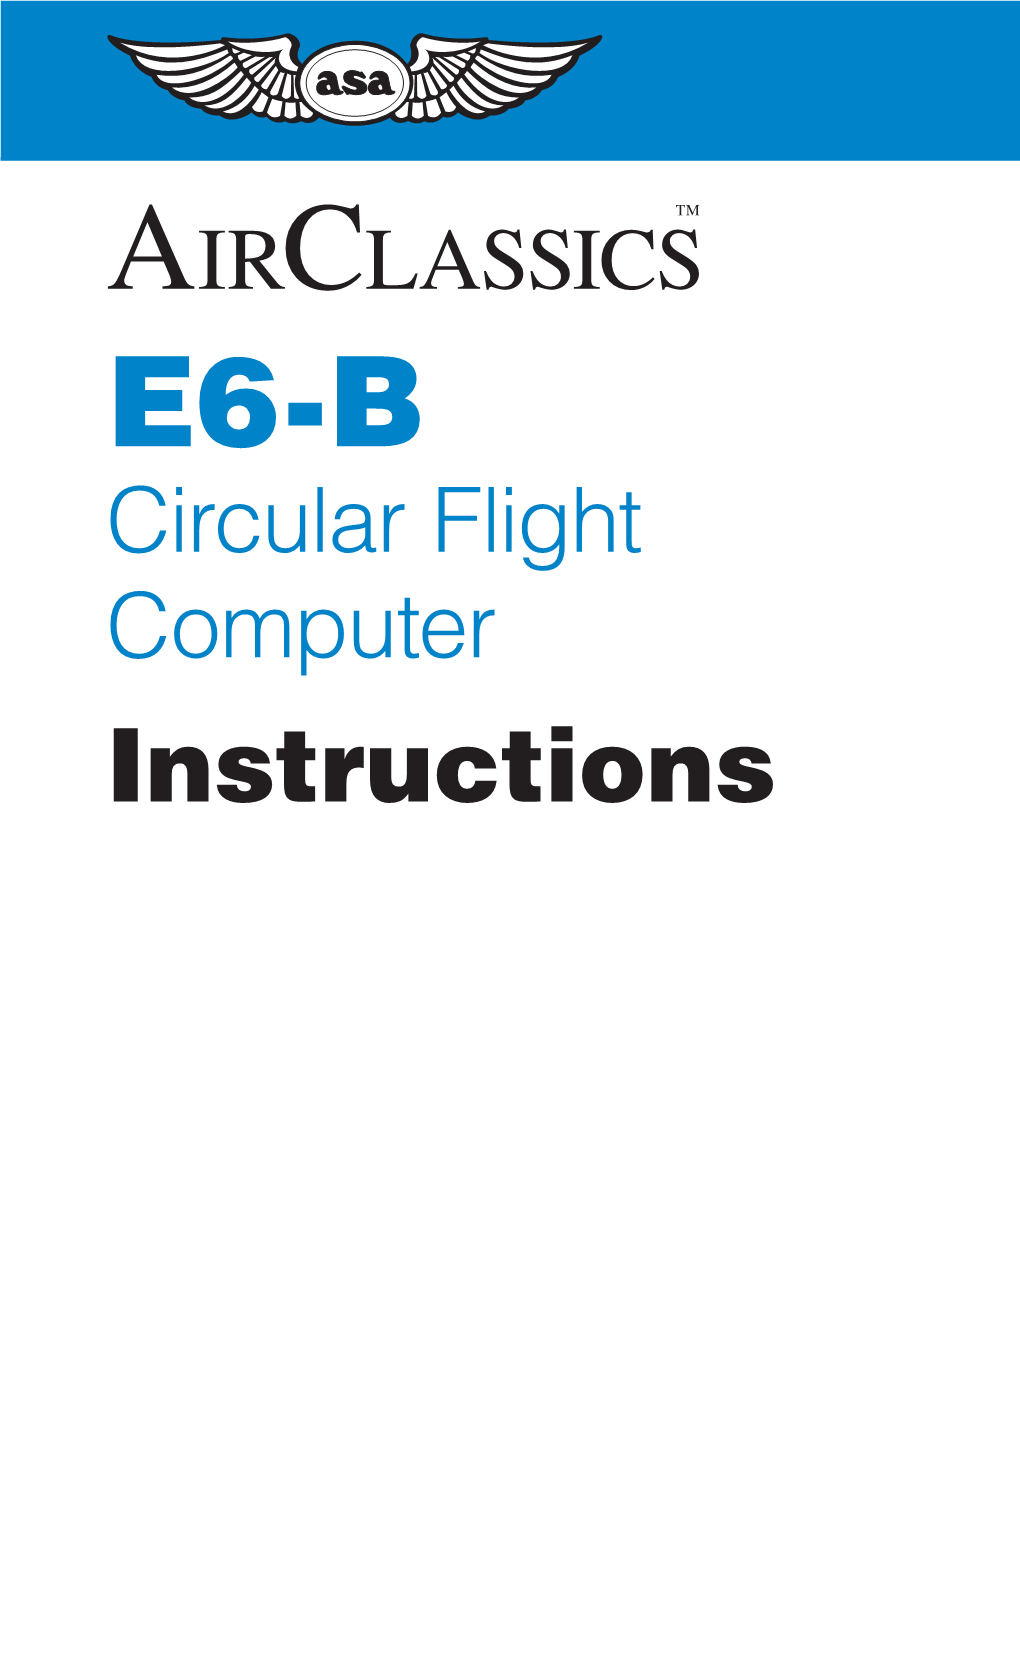 E6-B Circular Flight Computer Instructions E6-B Circular Flight Computer Instructions